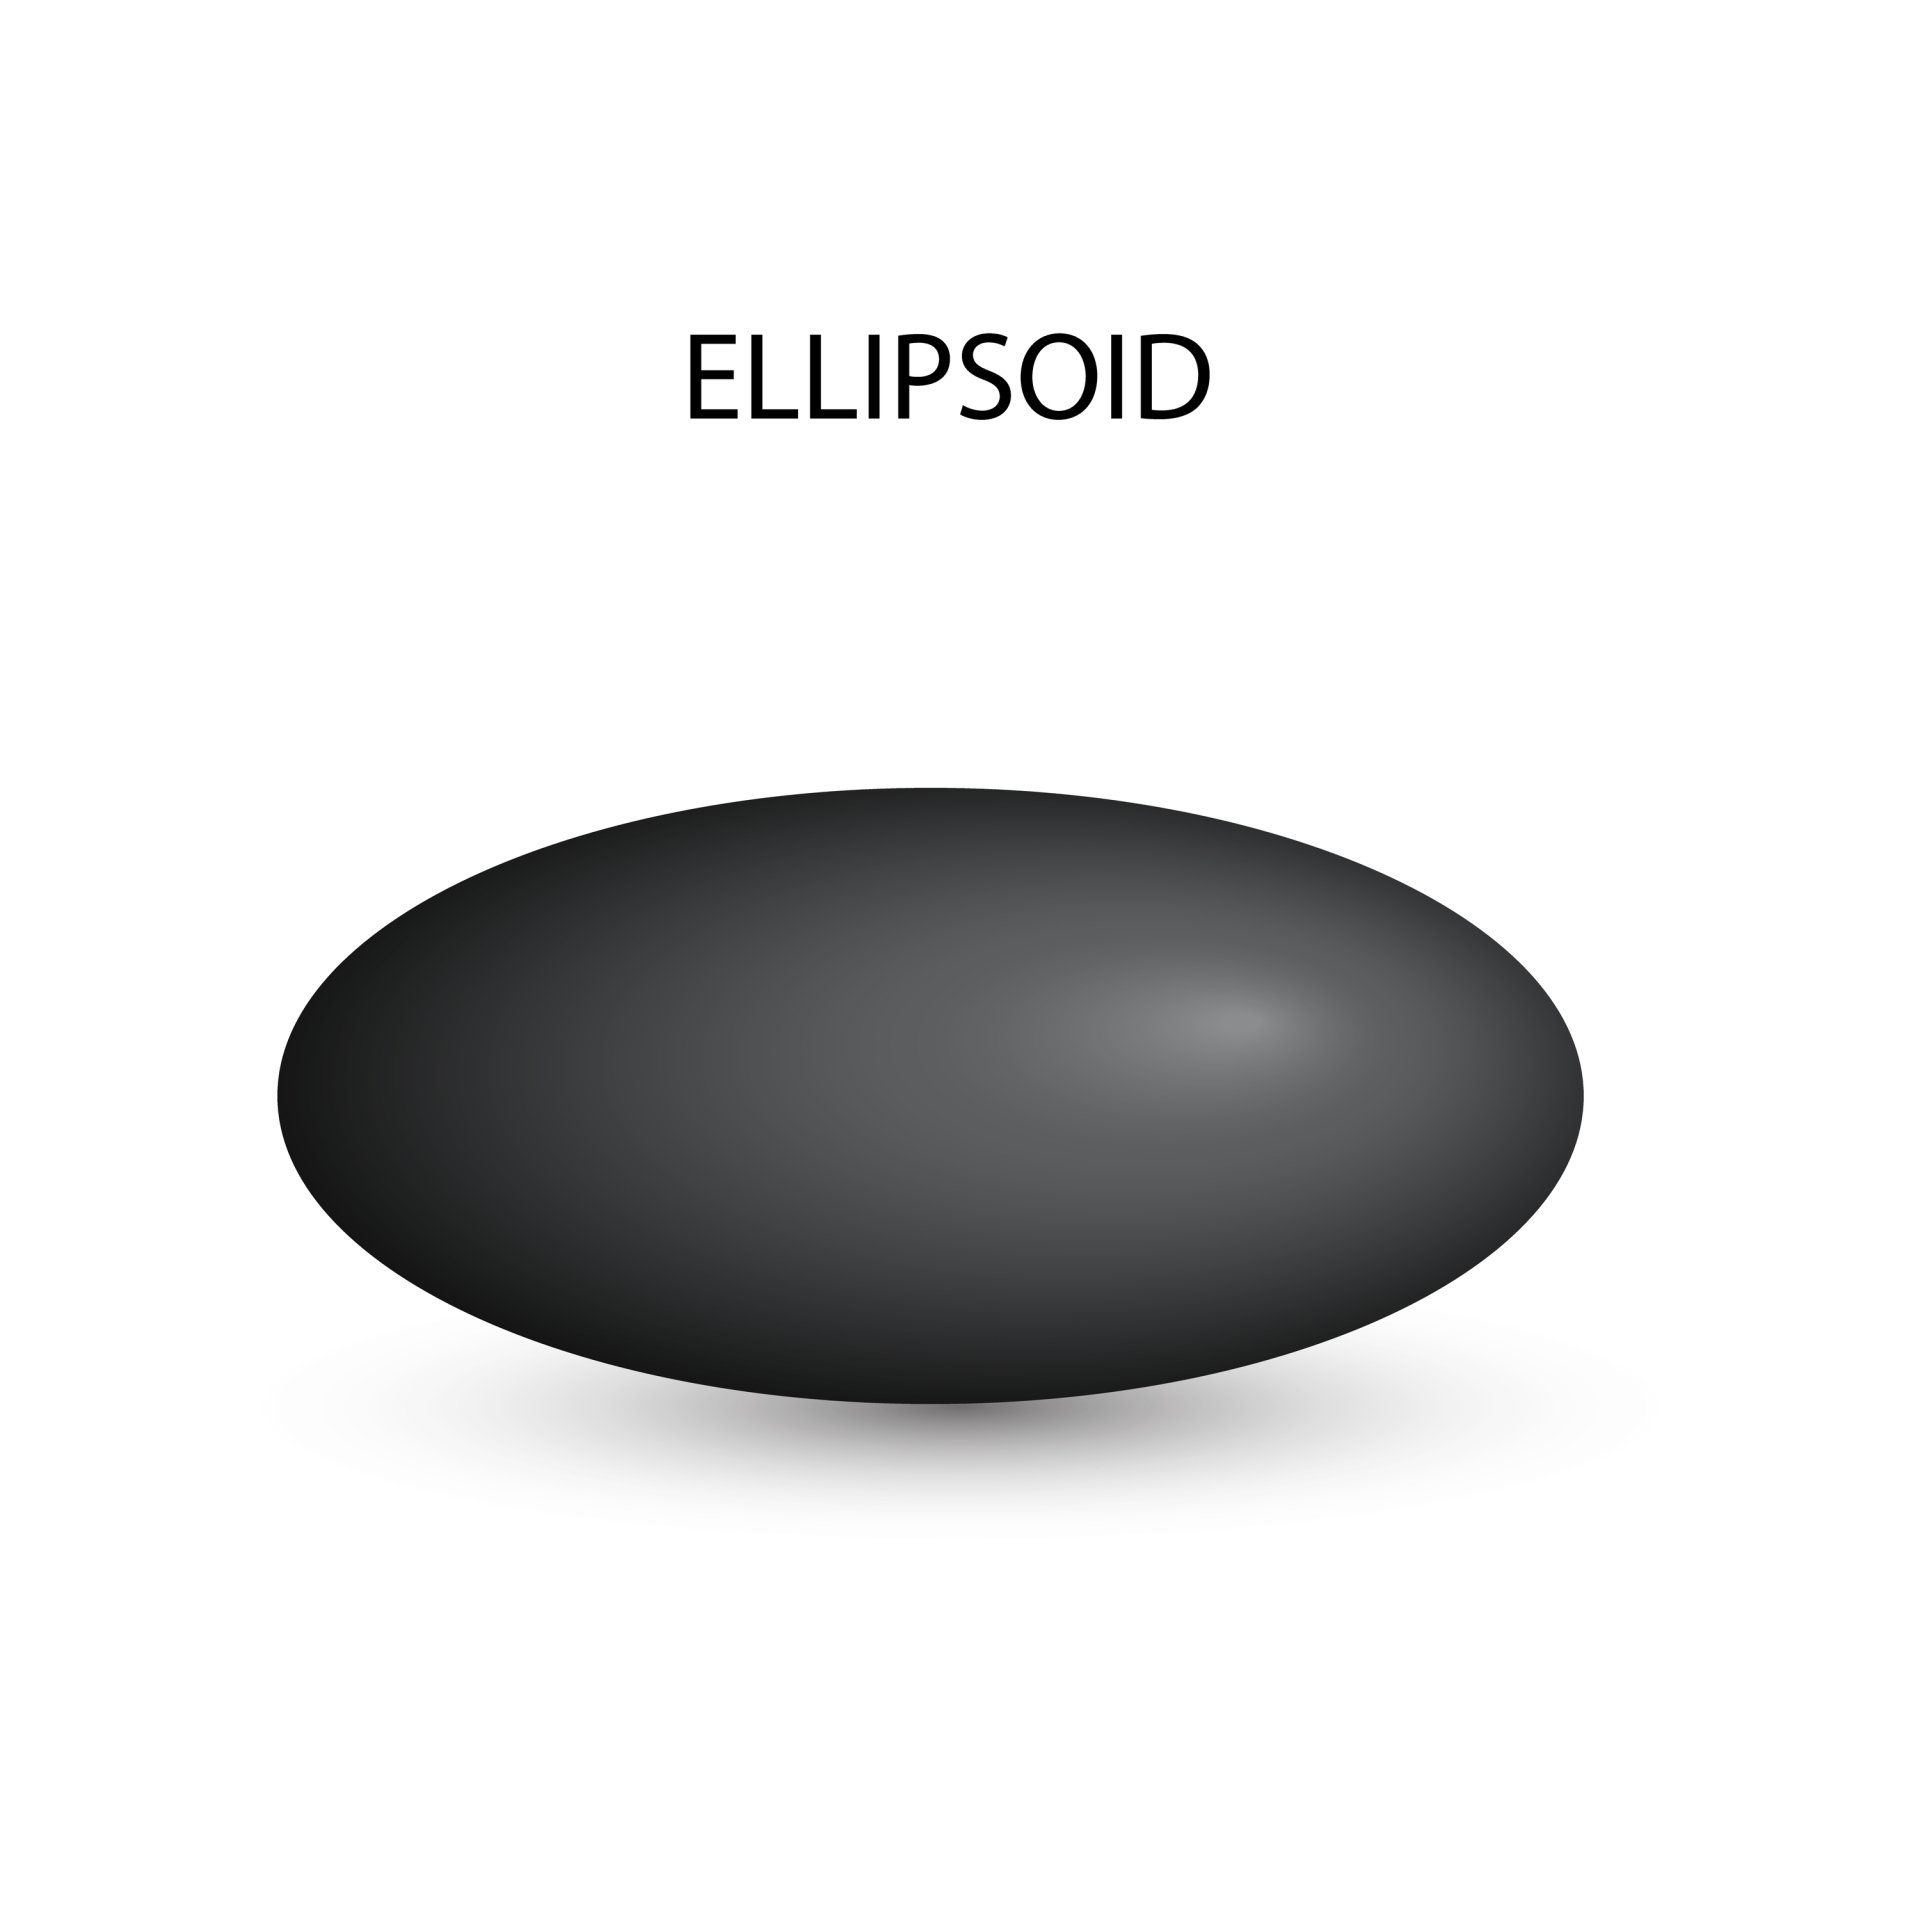 Diagram of a black ellipsoid